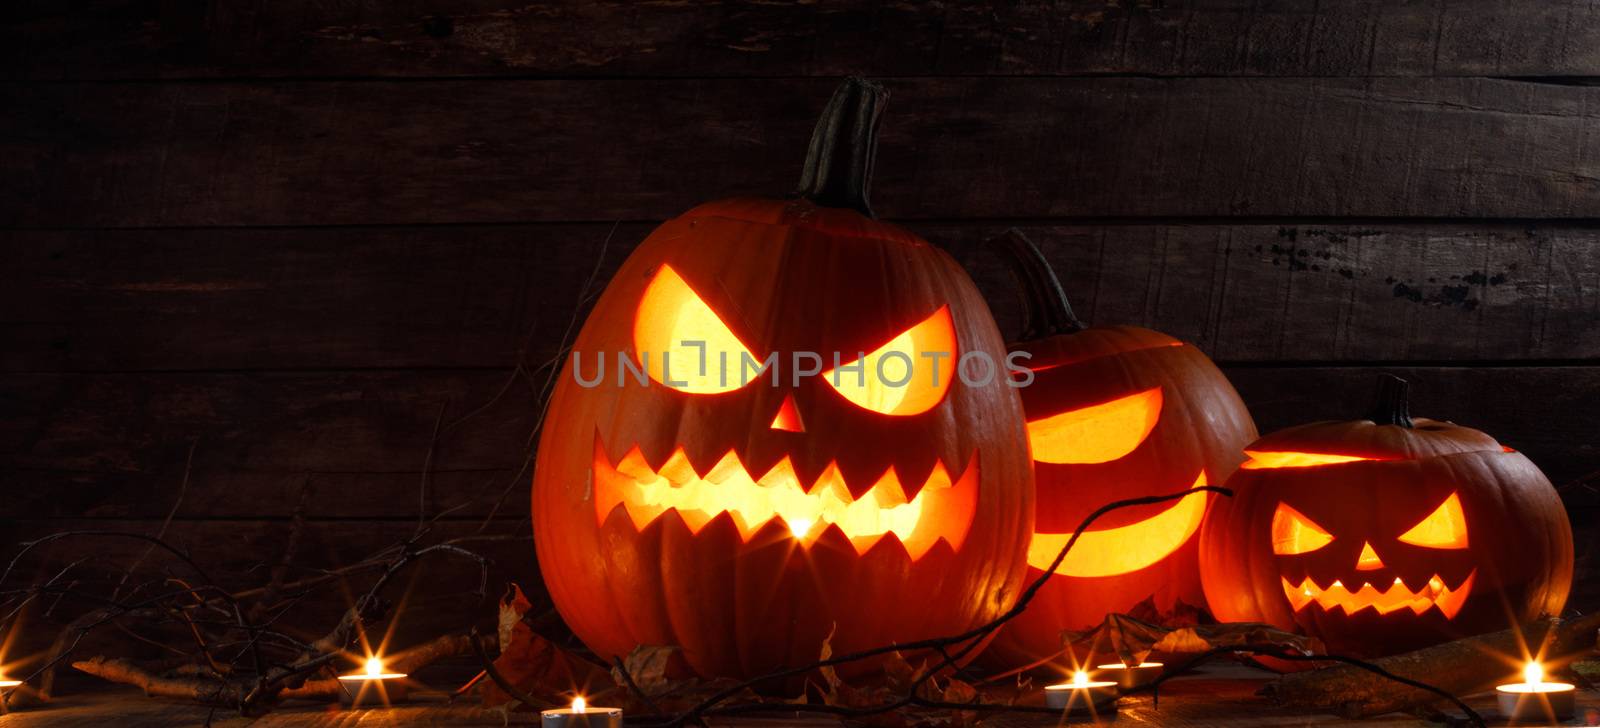 Halloween pumpkin head lantern and burning candles holiday celebration